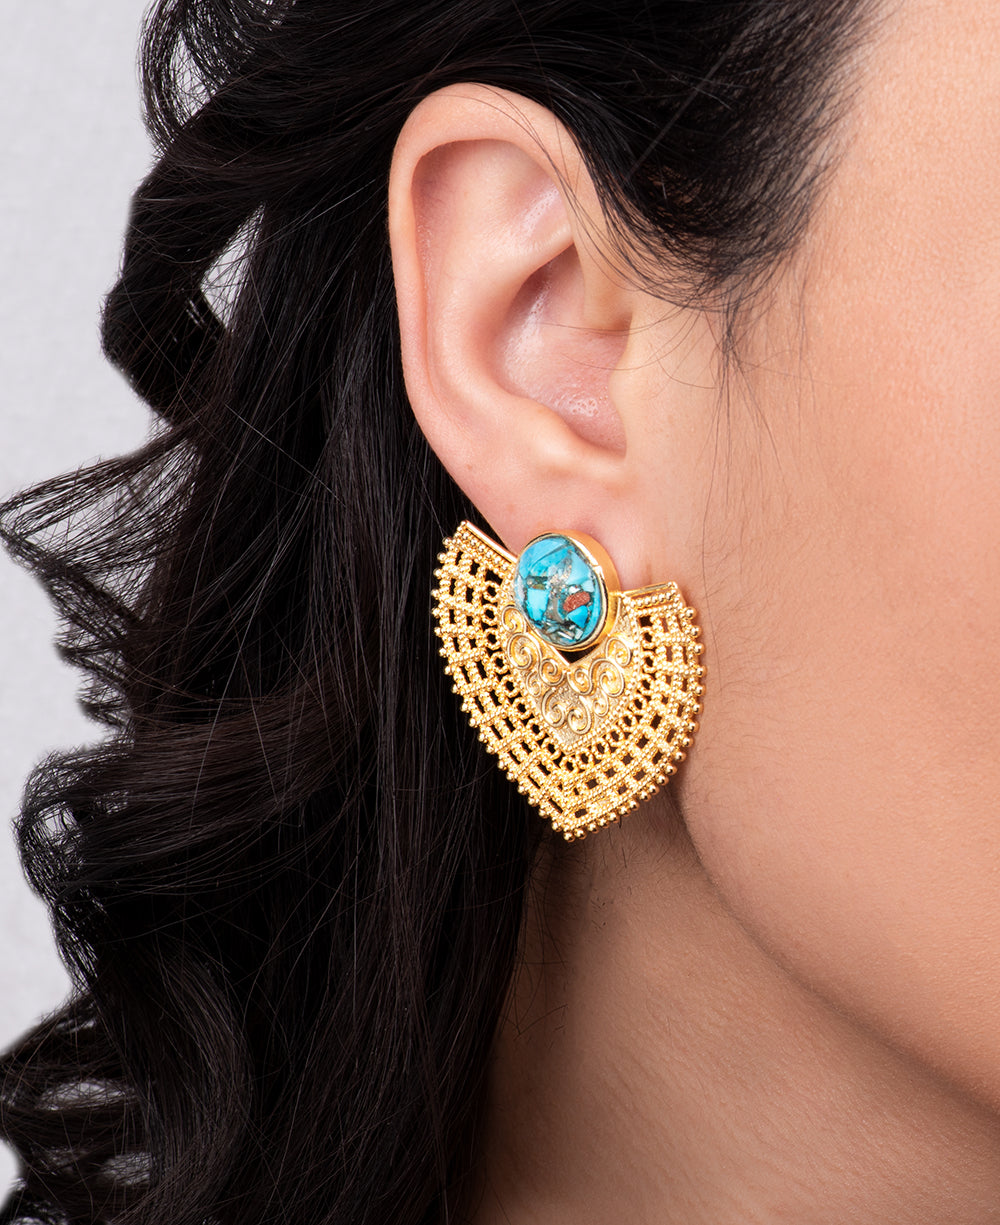 Turquoise Petal Earrings